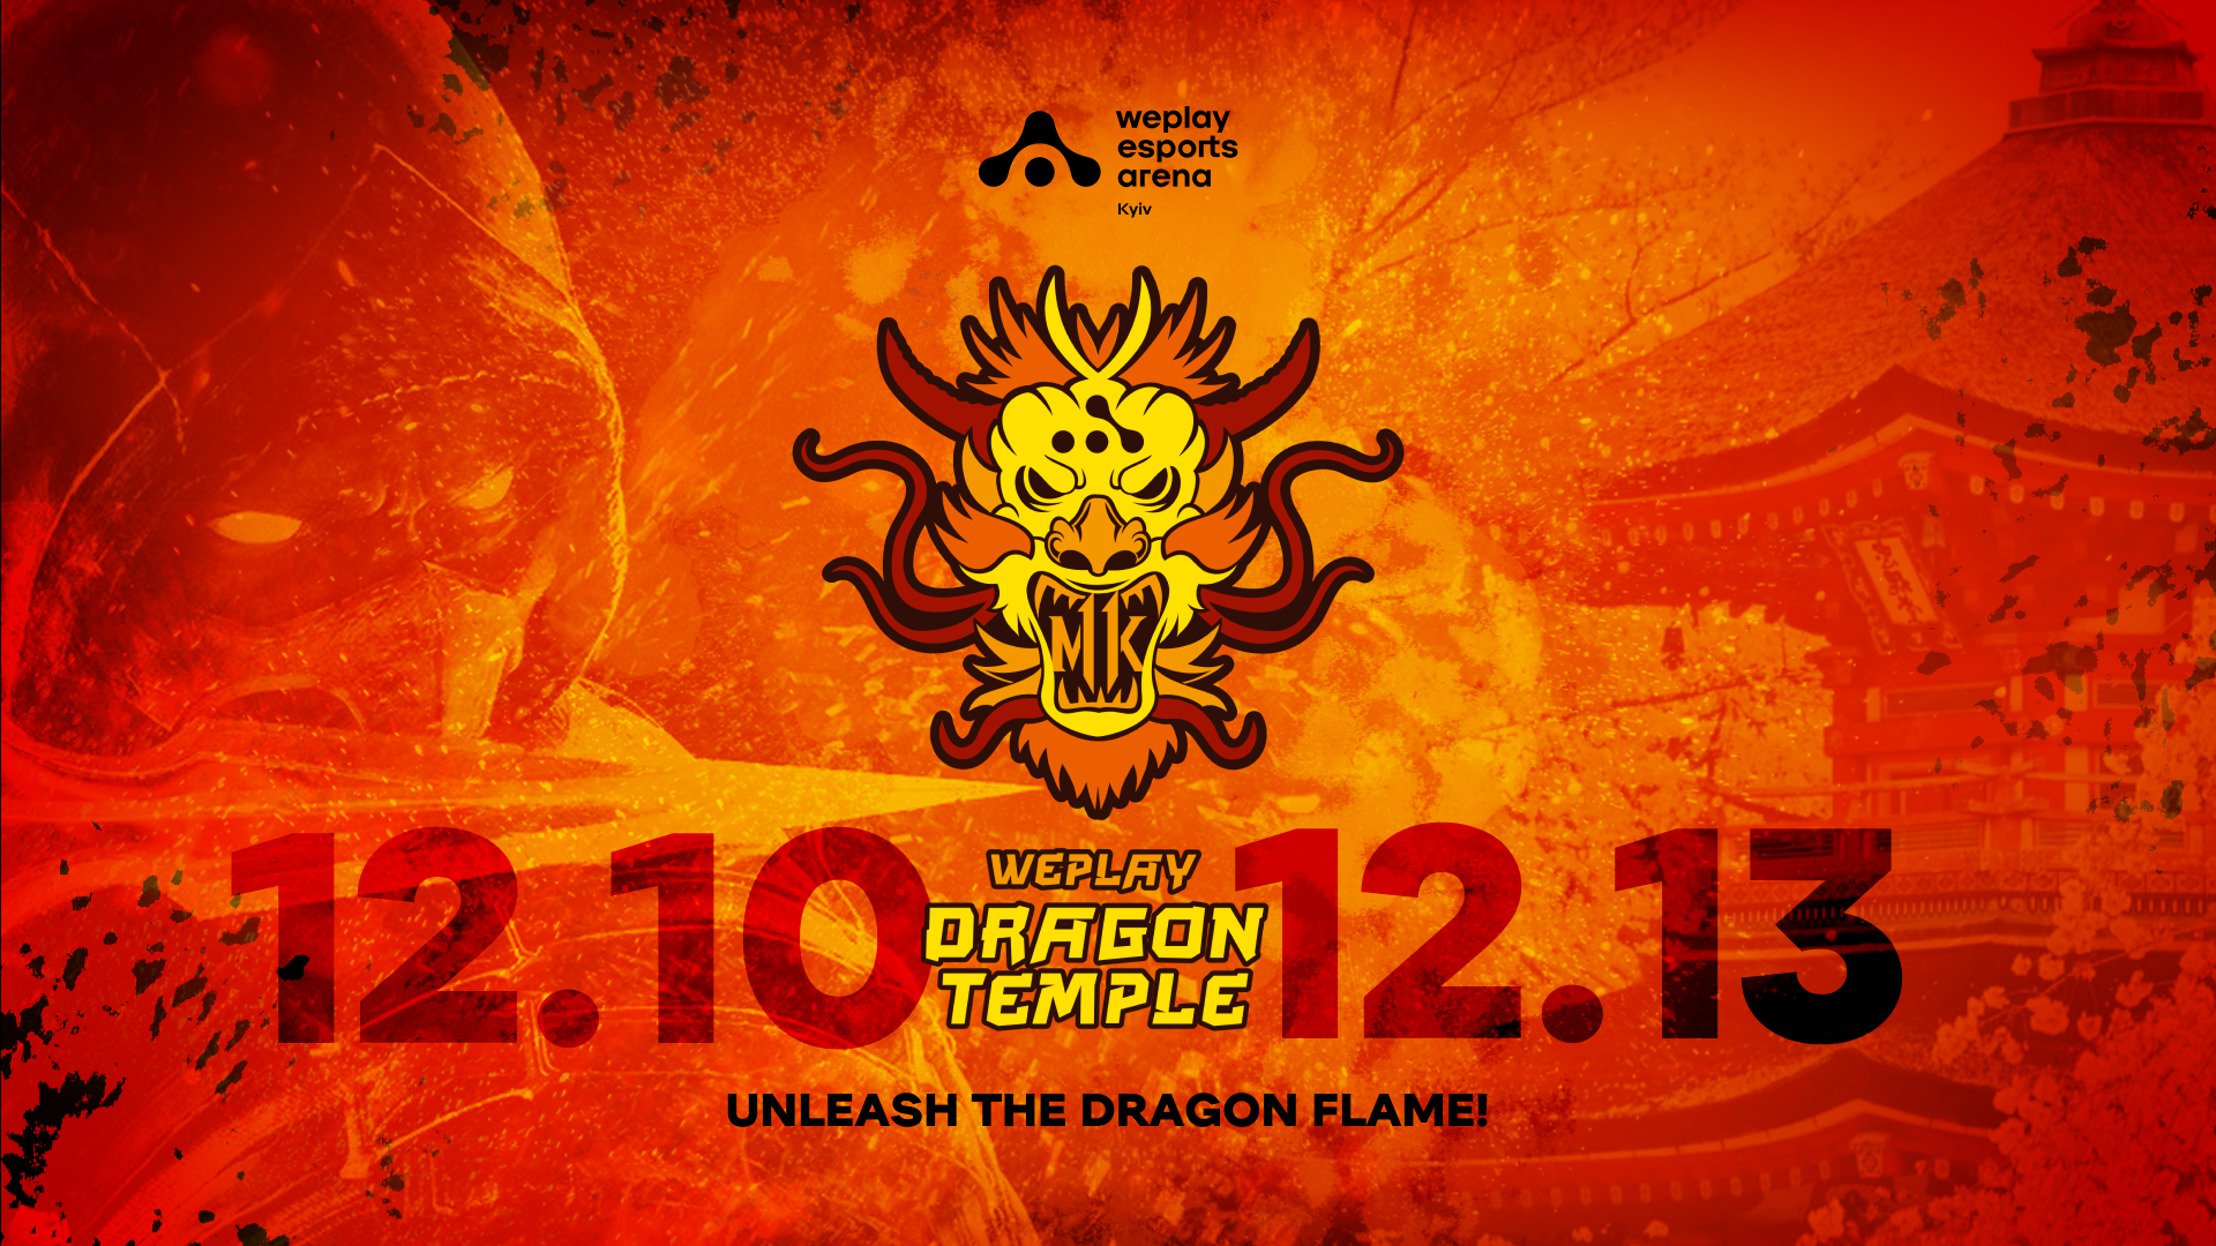 Introducing the Mortal Kombat 11 tournament WePlay Dragon Temple